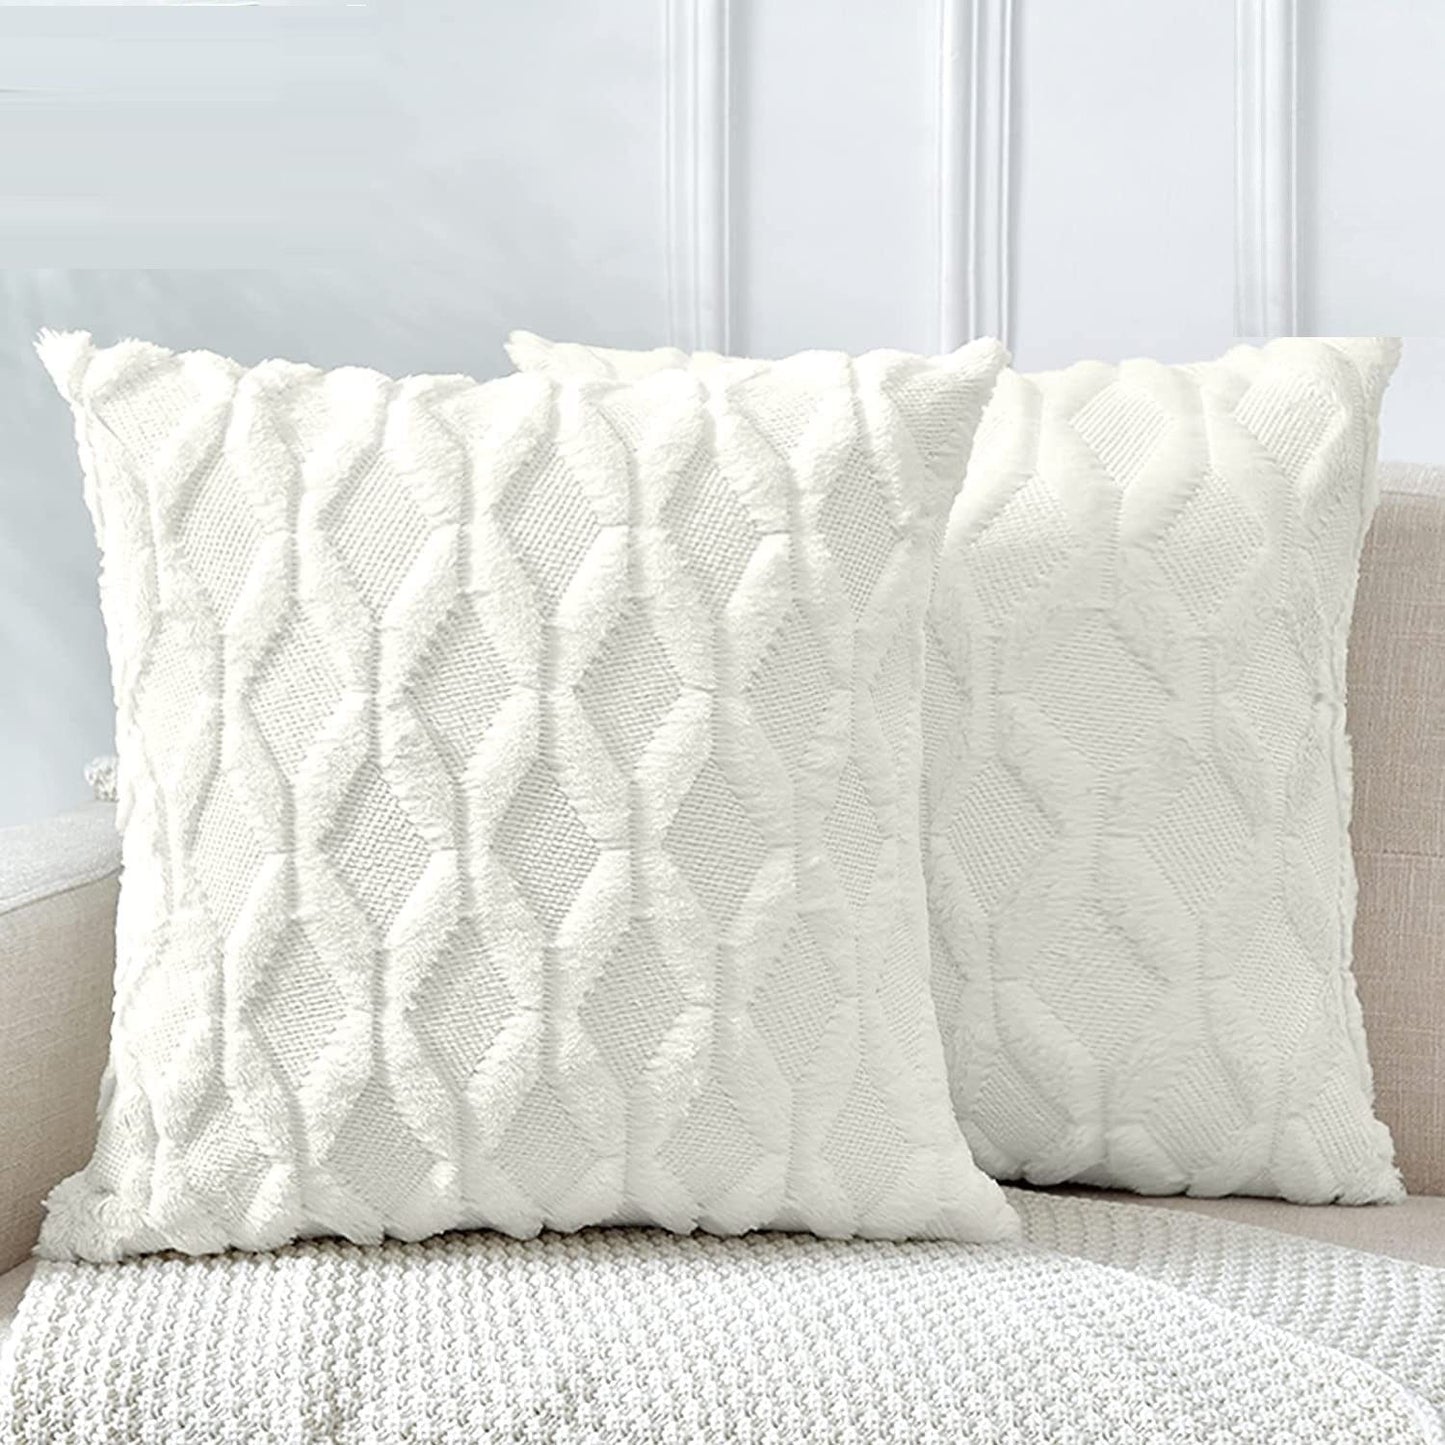 Decorative Boho Throw Pillow Covers 45 x 45 cm - 2 pack White